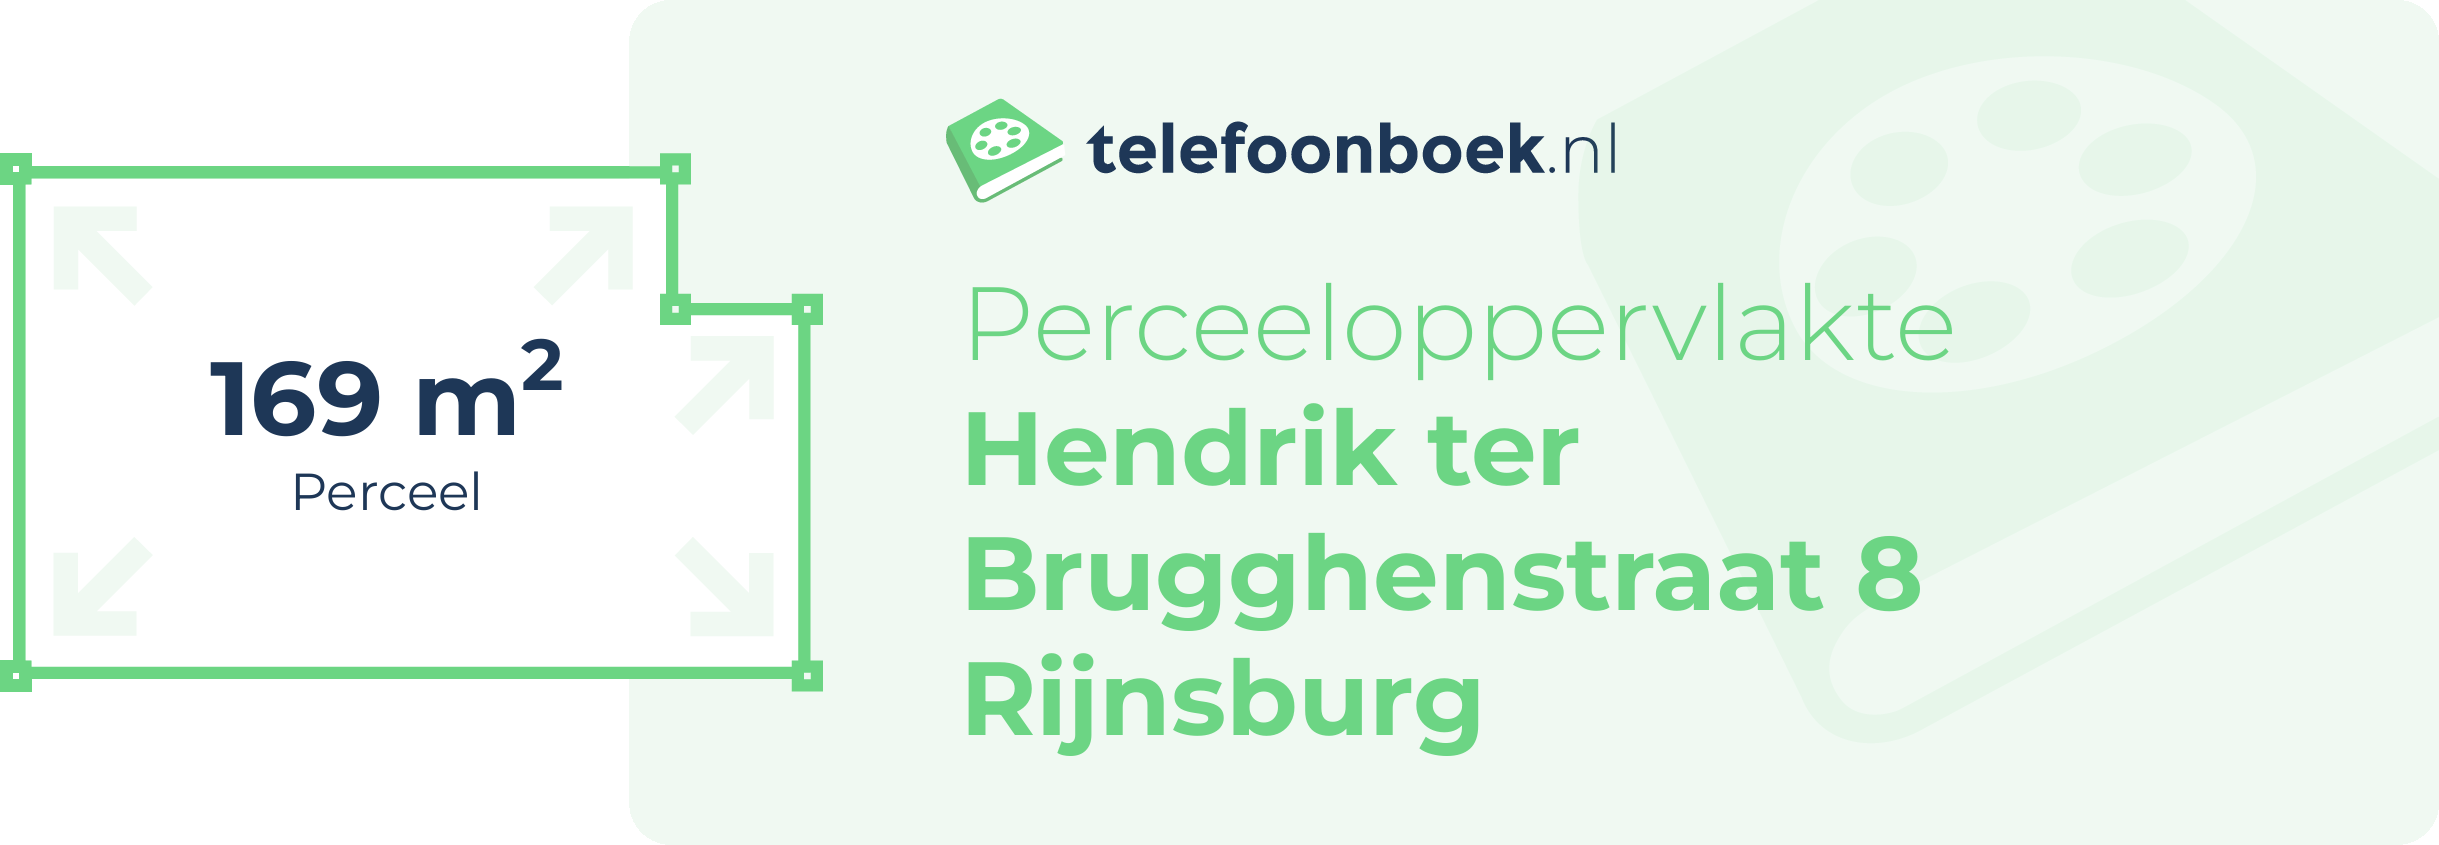 Perceeloppervlakte Hendrik Ter Brugghenstraat 8 Rijnsburg